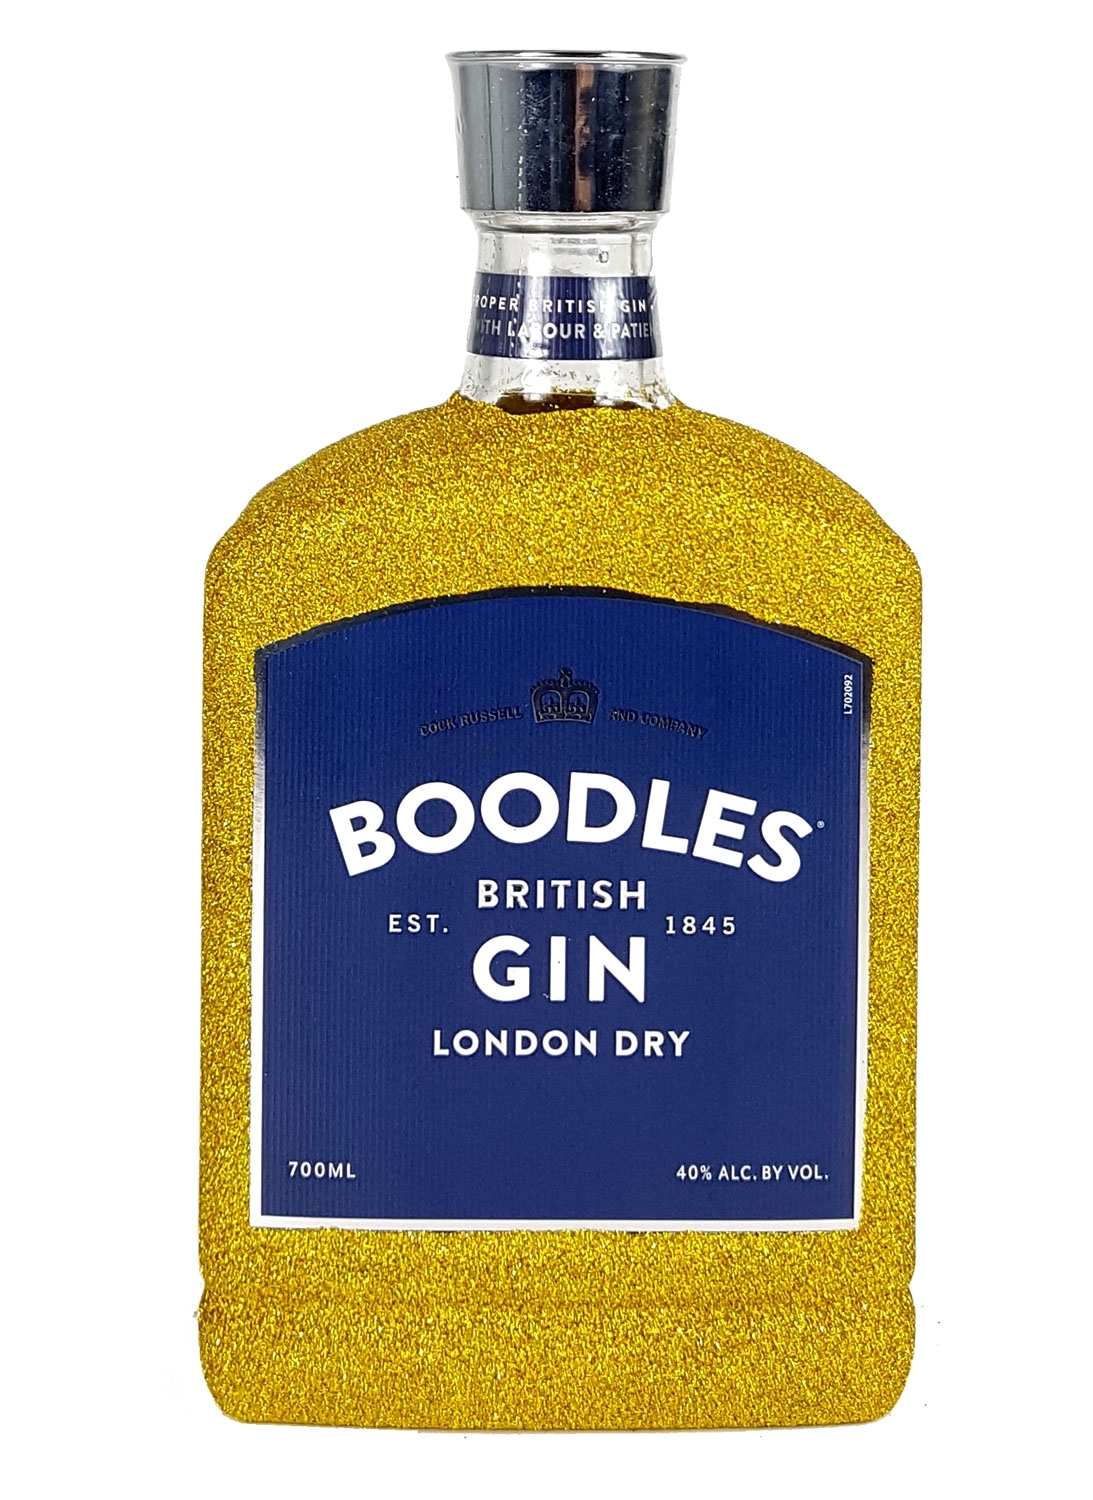 Boodles London Dry Gin 0,7l 700ml (40% Vol) Bling Bling Glitzerflasche - gold -[Enthält Sulfite]